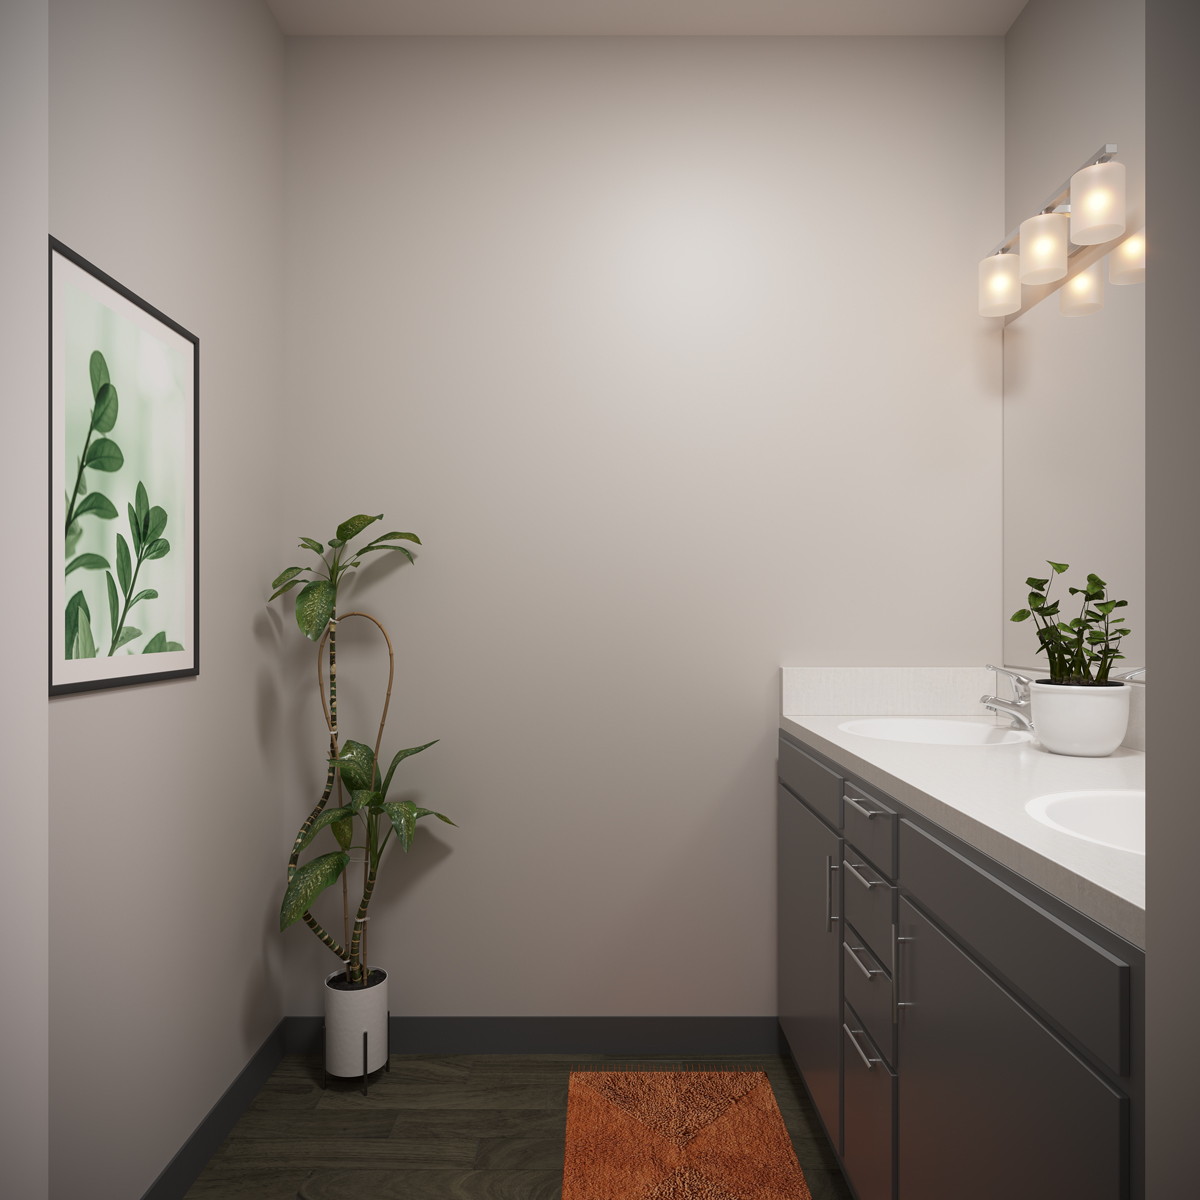 Furnished apartment bathroom